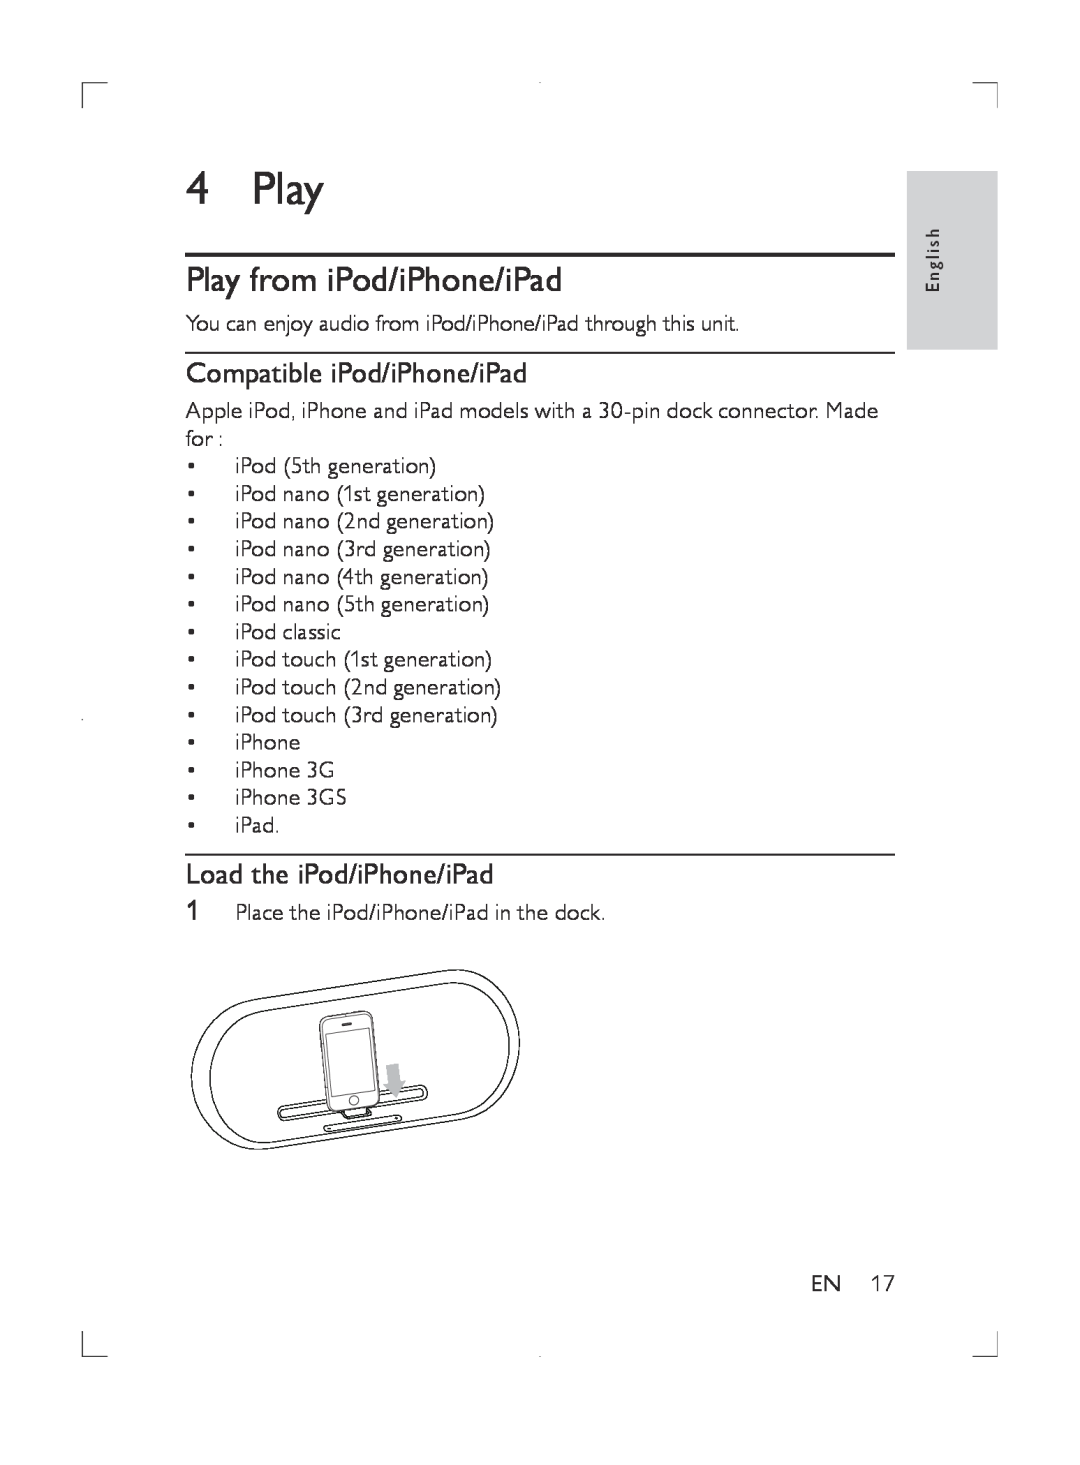 Philips DS8550 user manual Play from iPod/iPhone/iPad, Compatible iPod/iPhone/iPad, Load the iPod/iPhone/iPad 